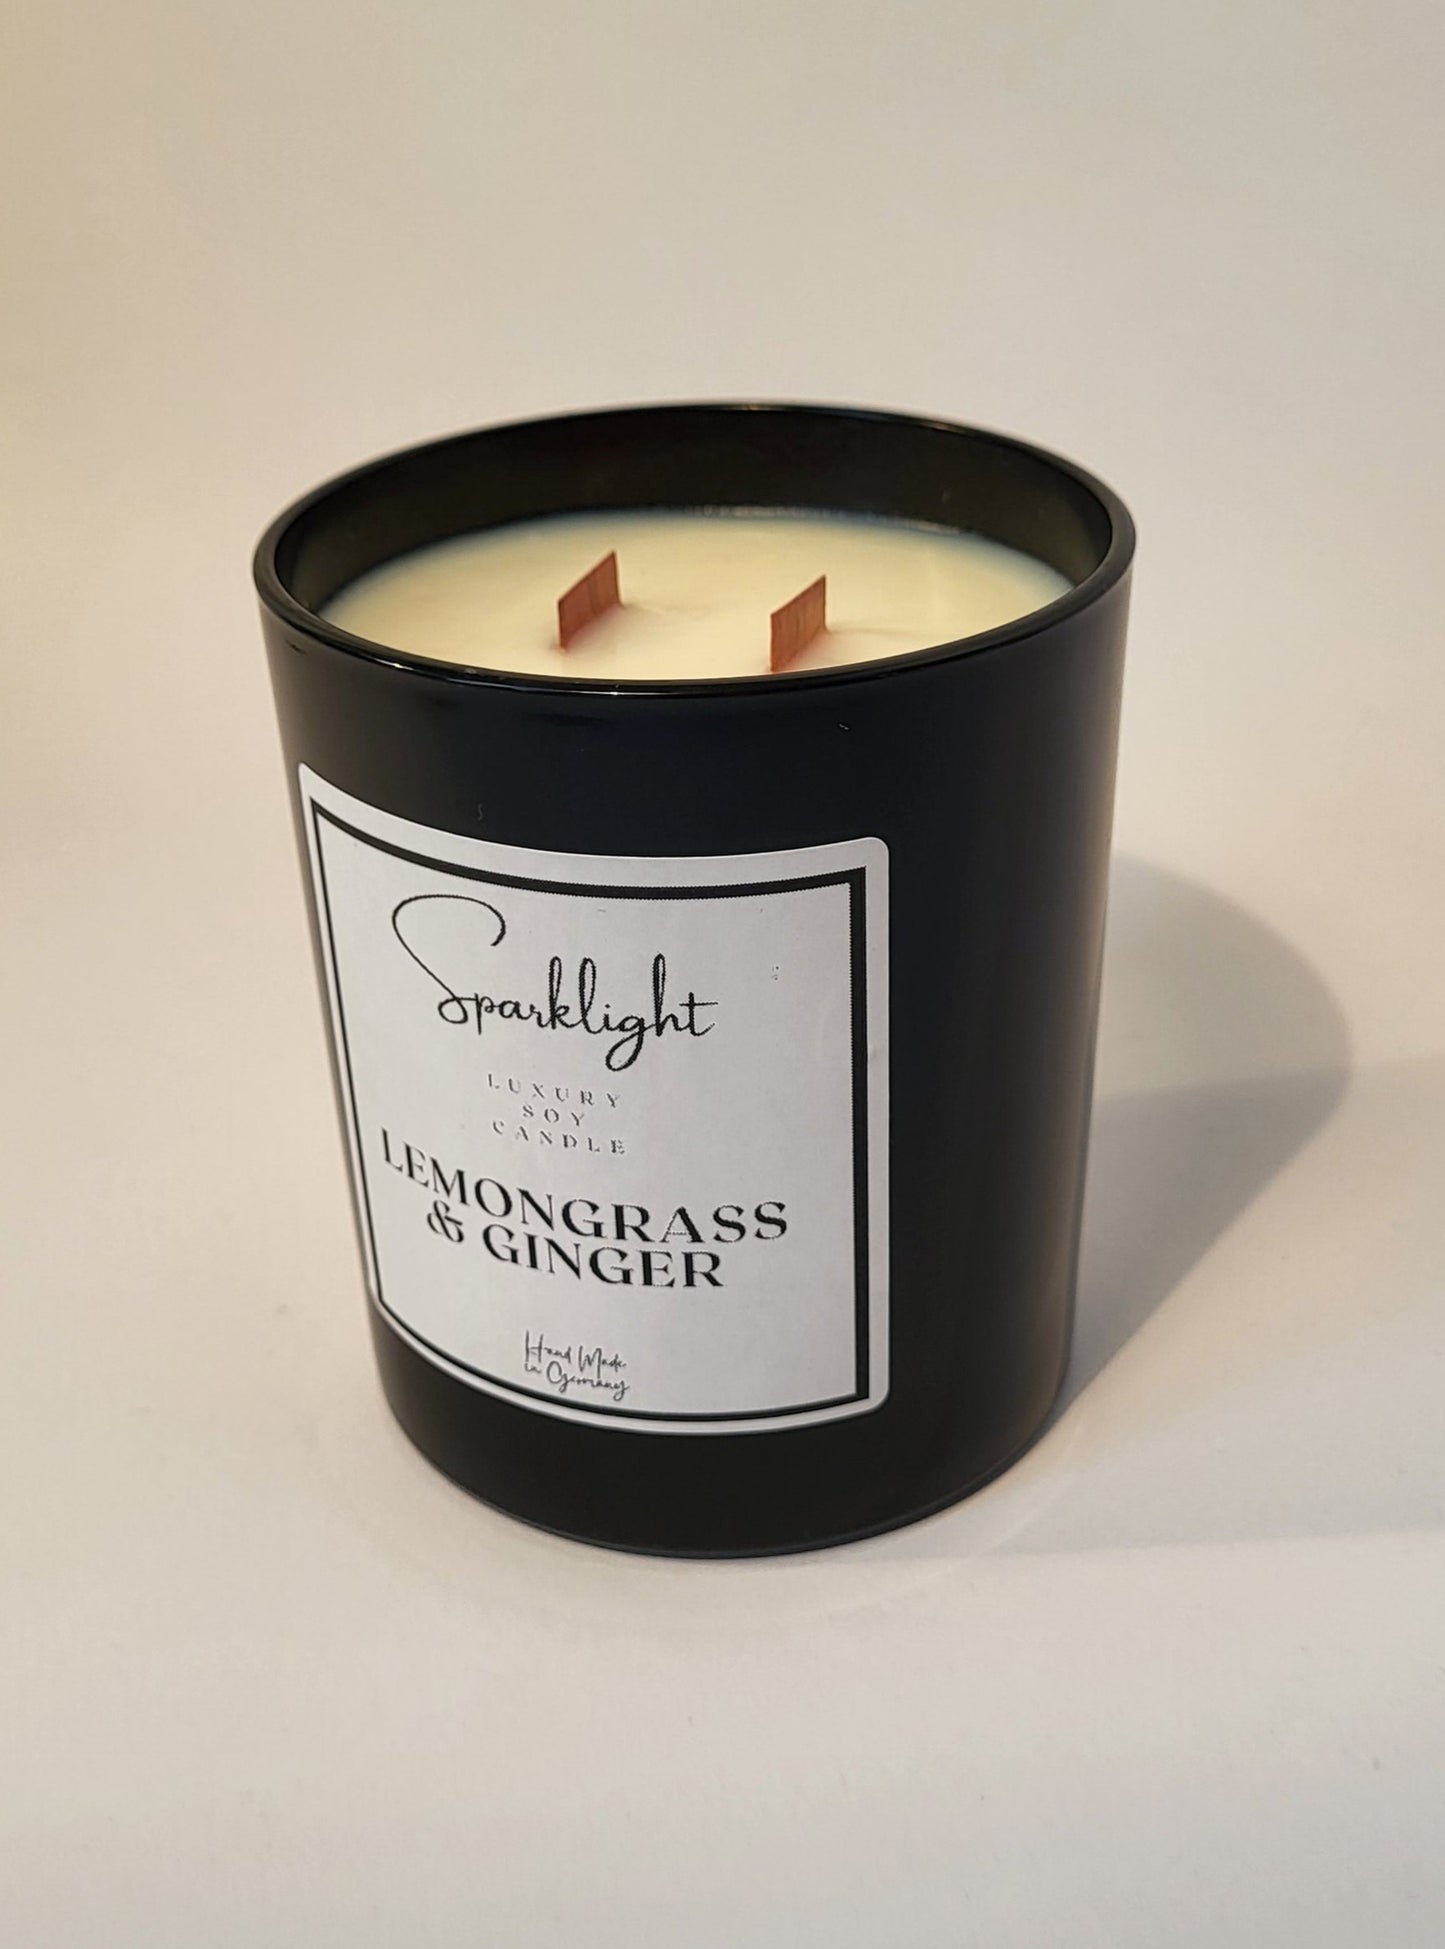 Black glass wooden wick candle - Lemongrass & Ginger